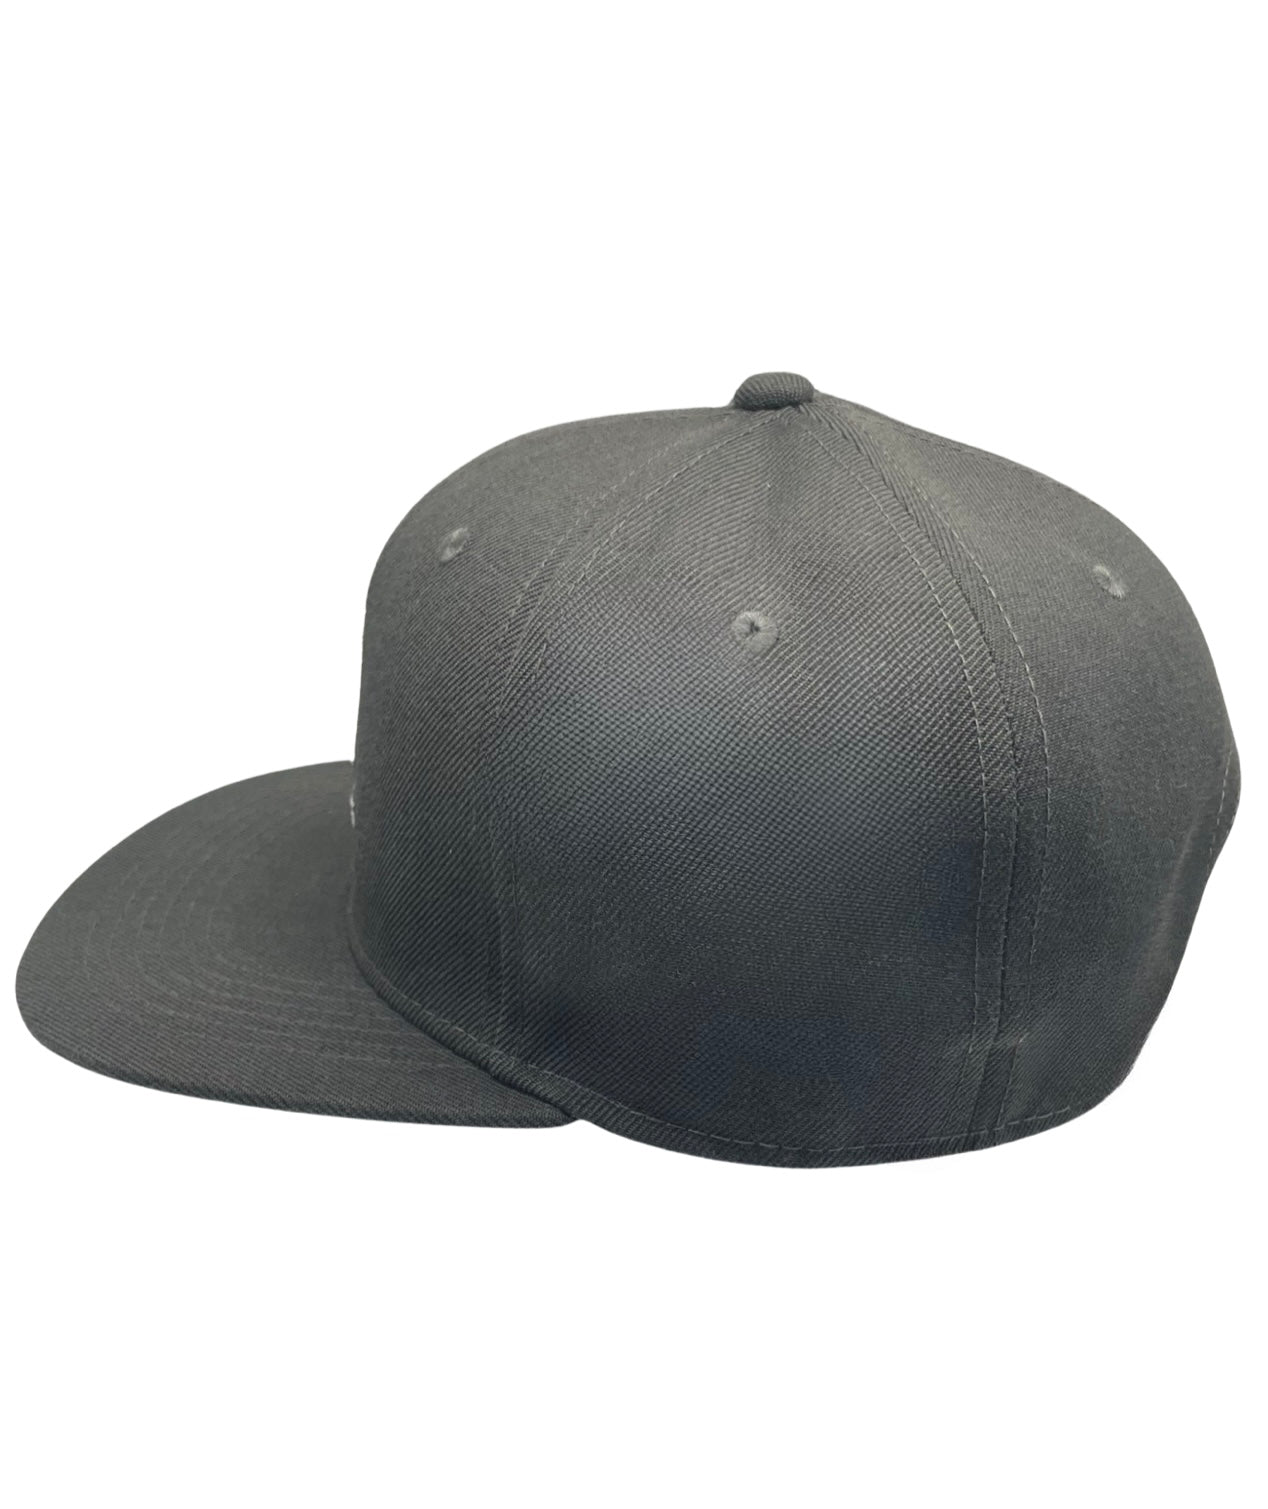 Zenit Emblem Snapback Hat